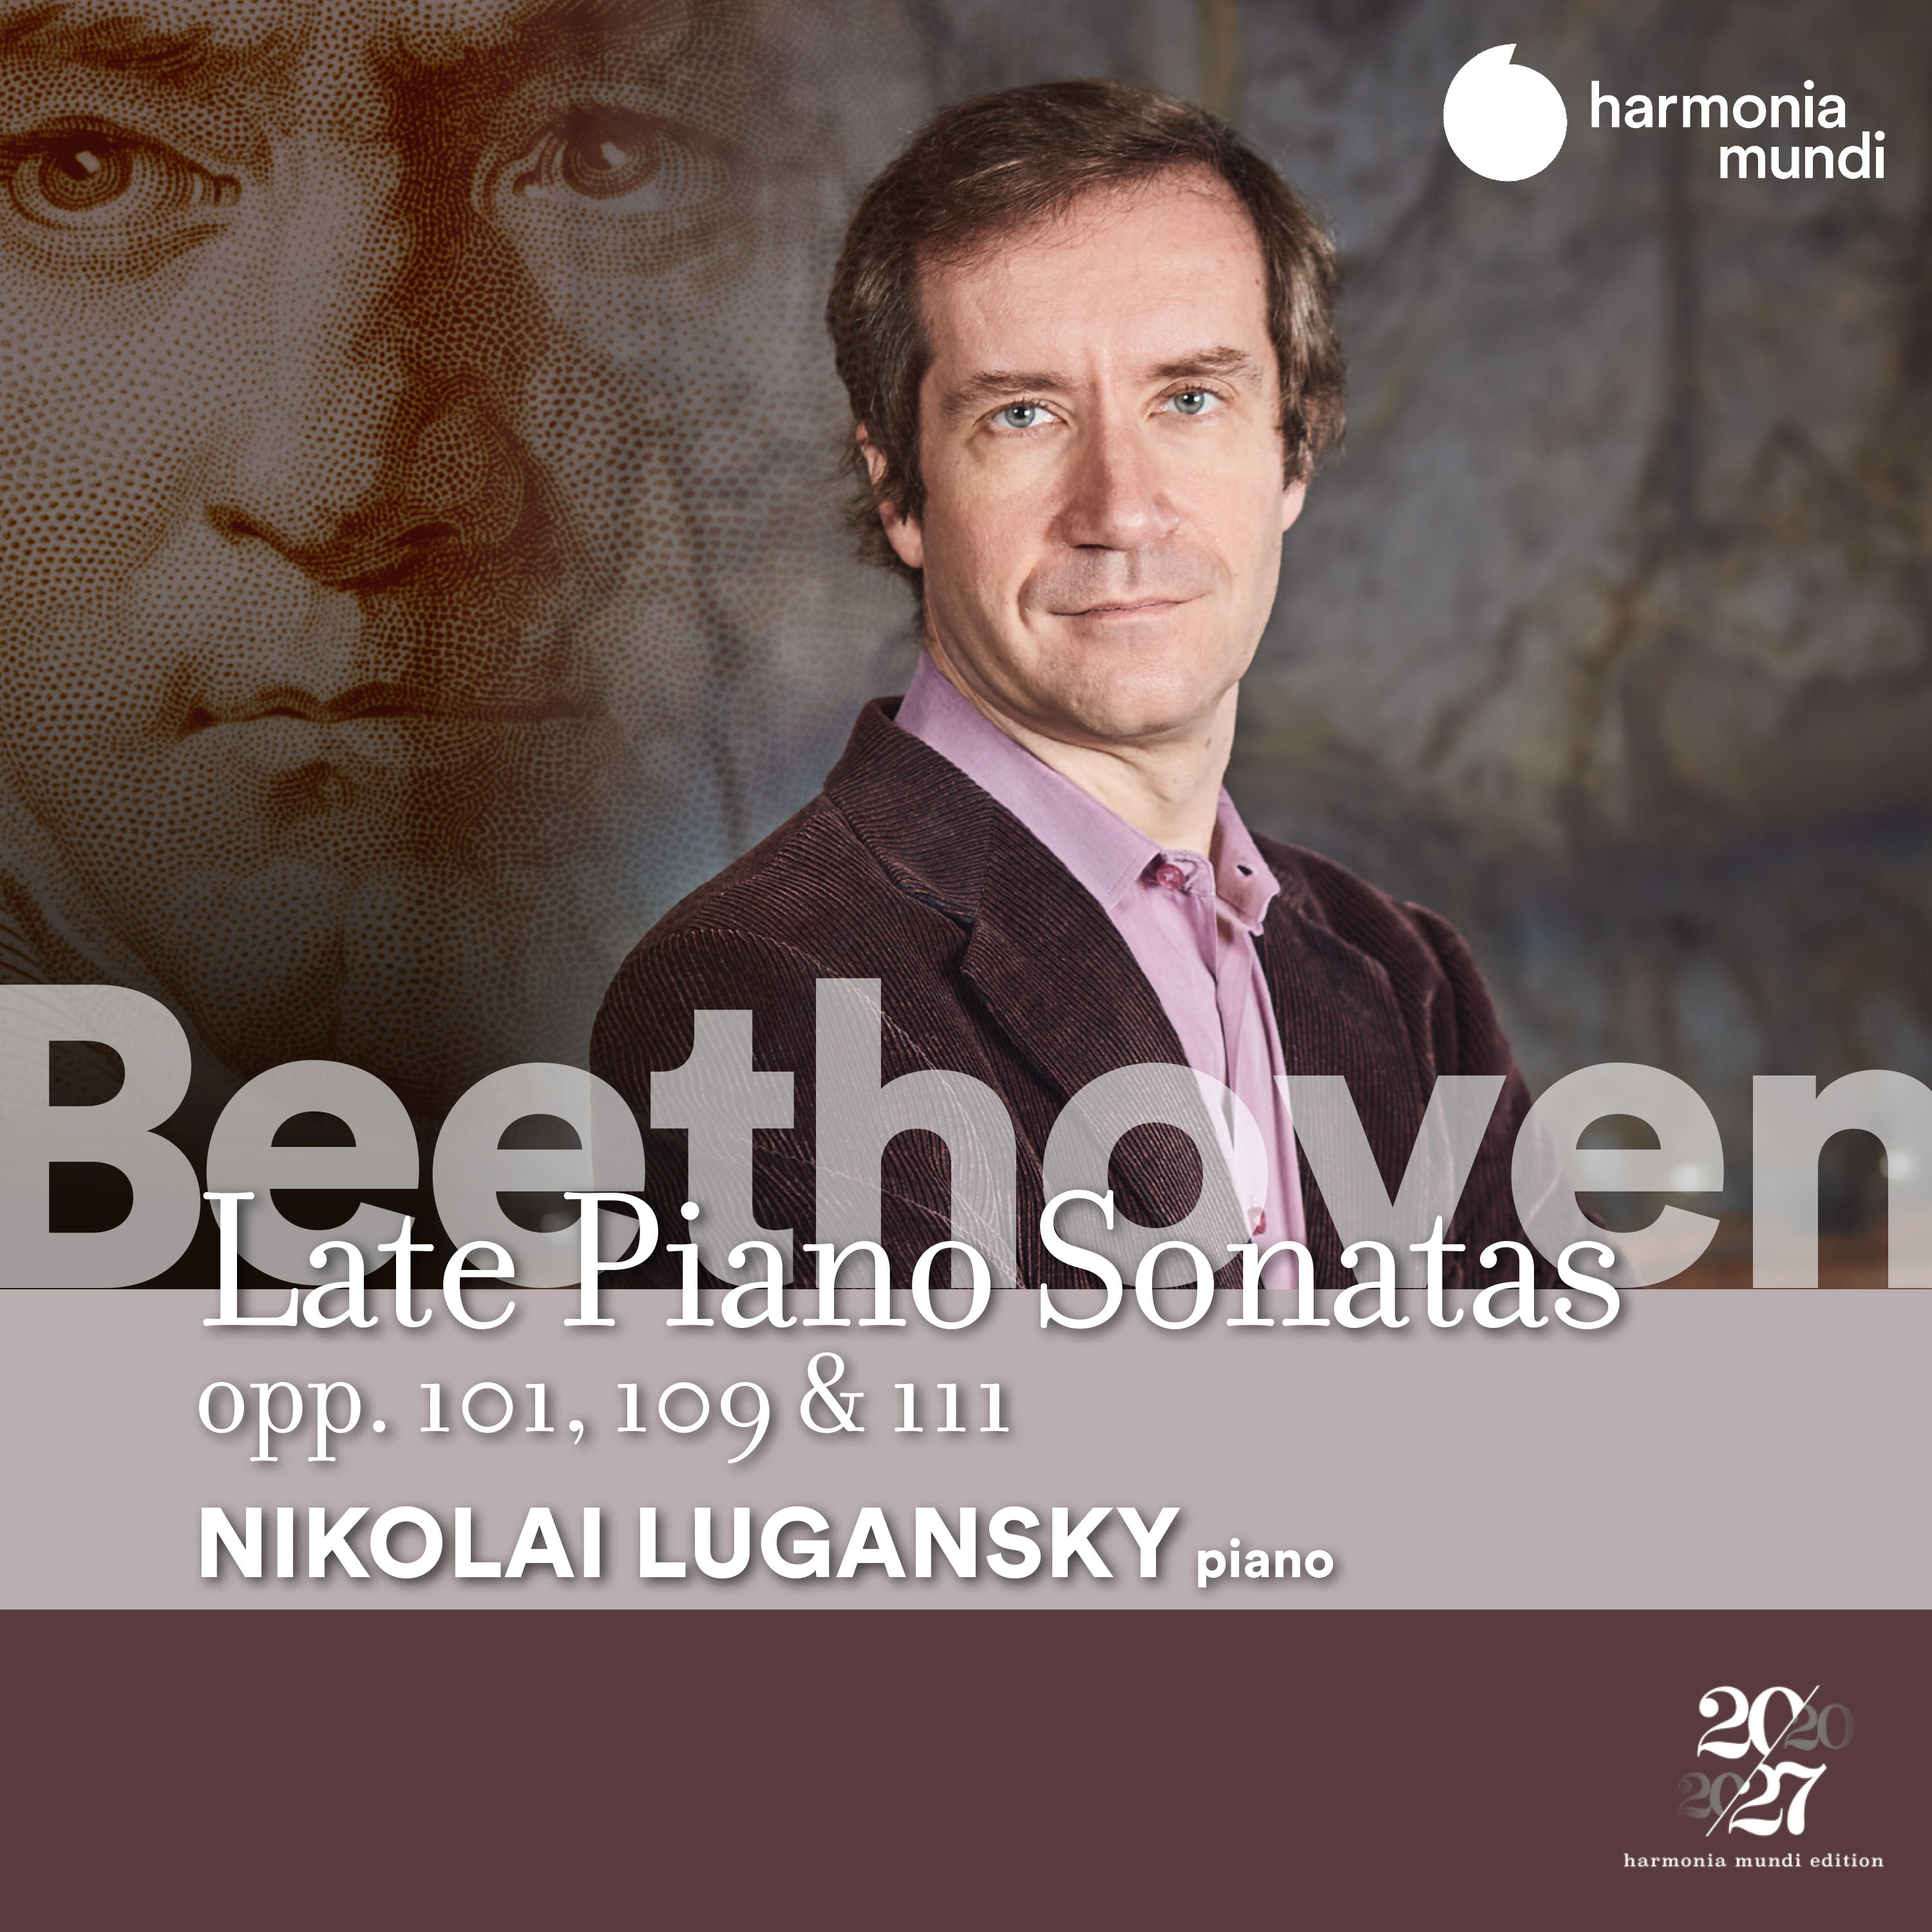 Nikolai Lugansky - Beethoven Late Piano Sonatas, Opp. 101,109 & 111 (2020) [FLAC 24bit/96kHz]